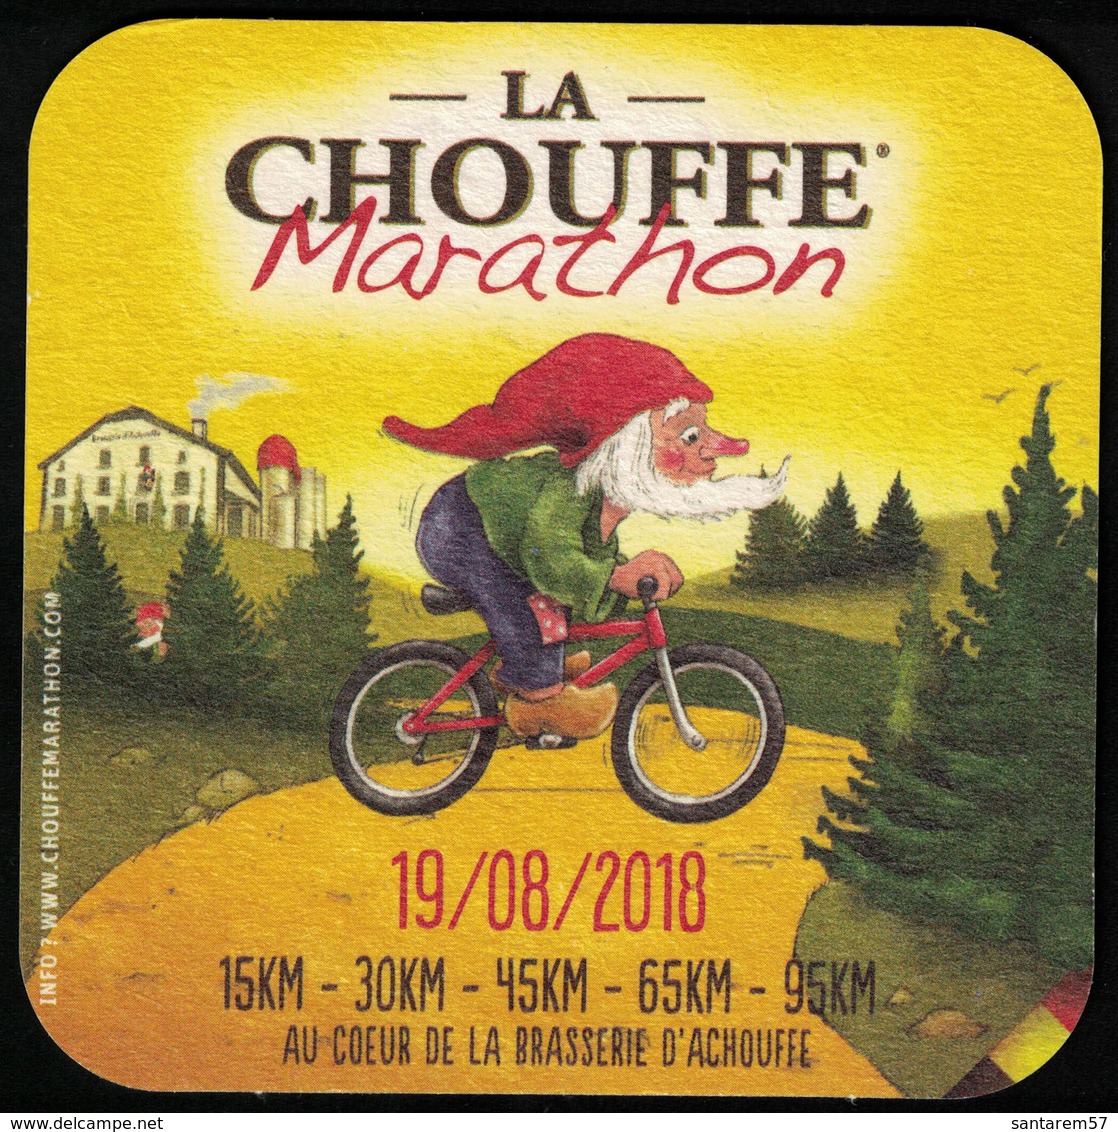 Belgique Sous Bock Beermat Coaster Bière Beer Chouffe Marathon Grande Choufferie 2018 - Sous-bocks